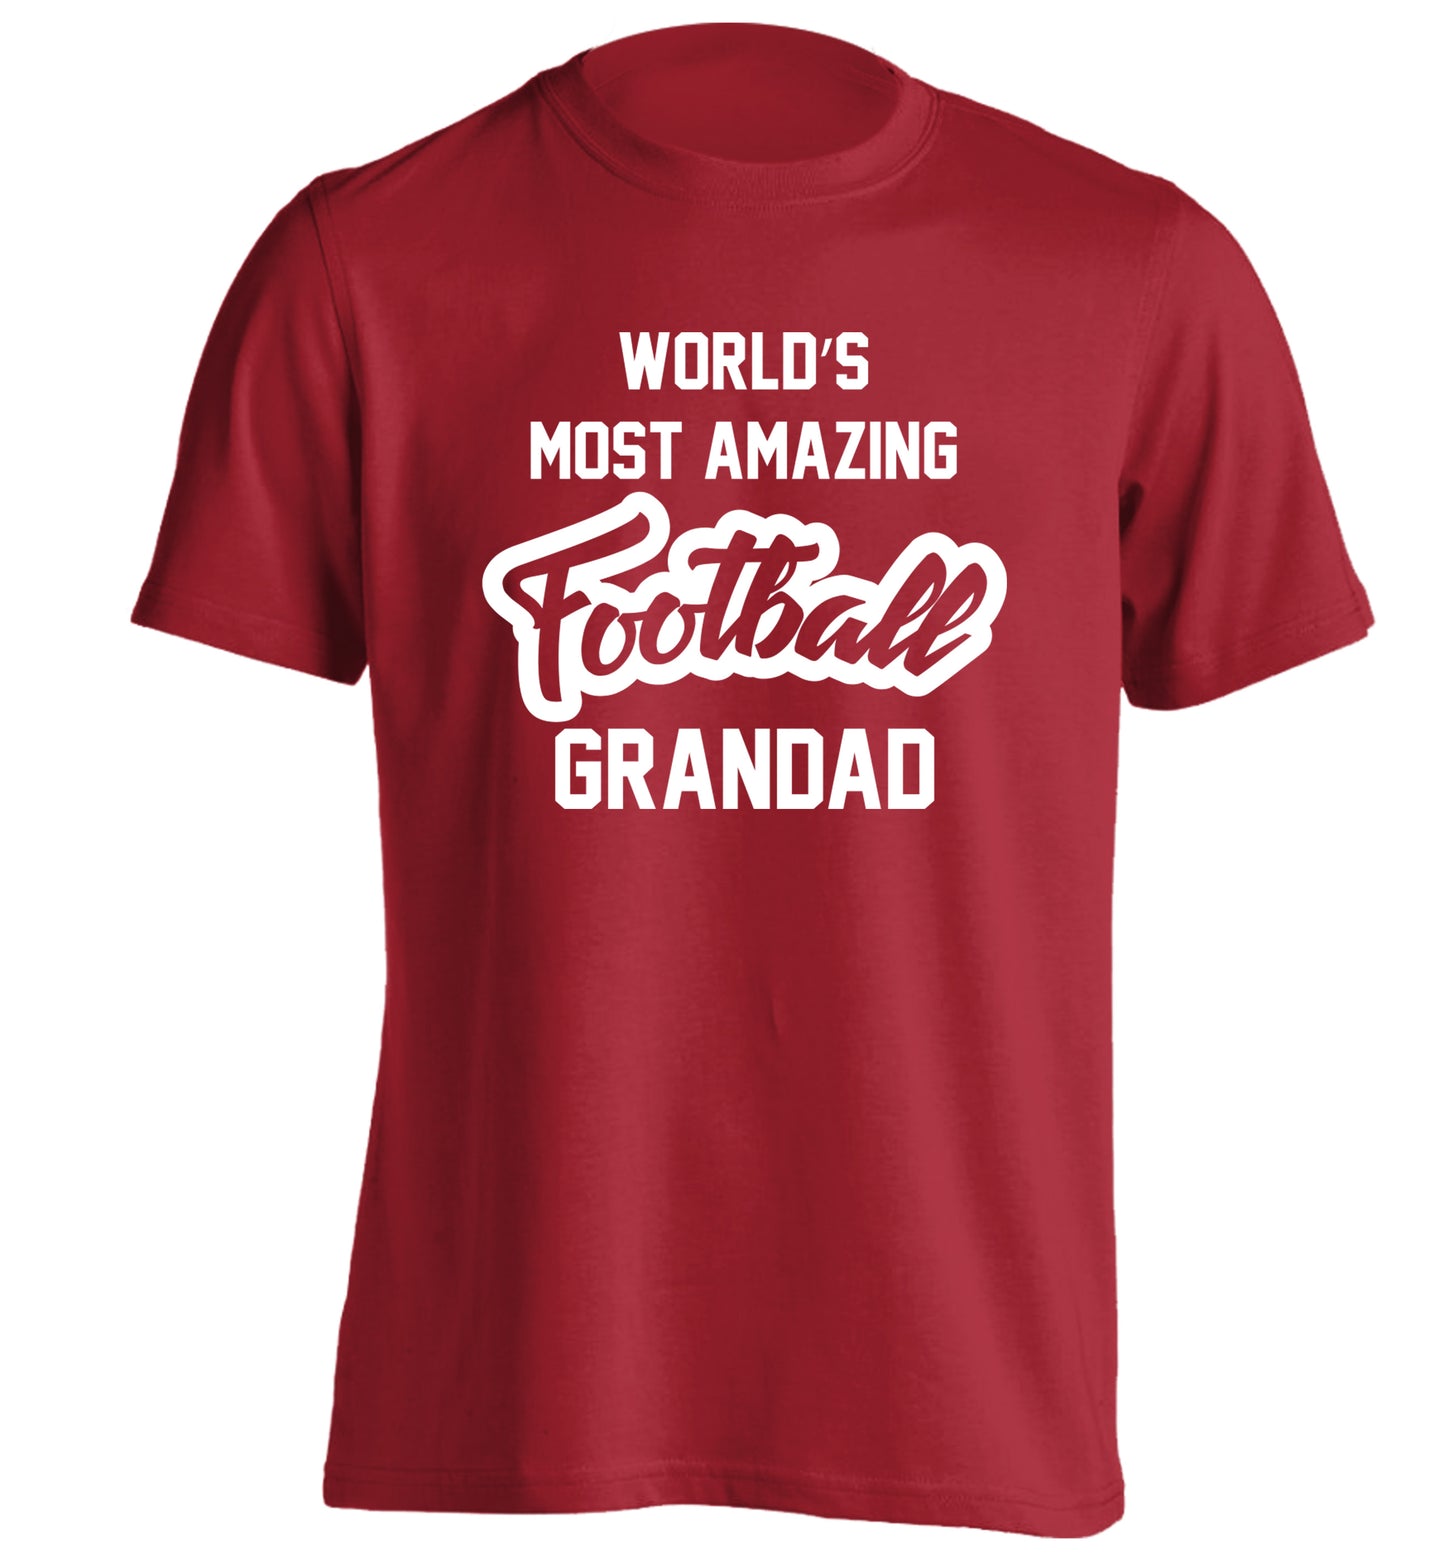 Worlds most amazing football grandad adults unisexred Tshirt 2XL